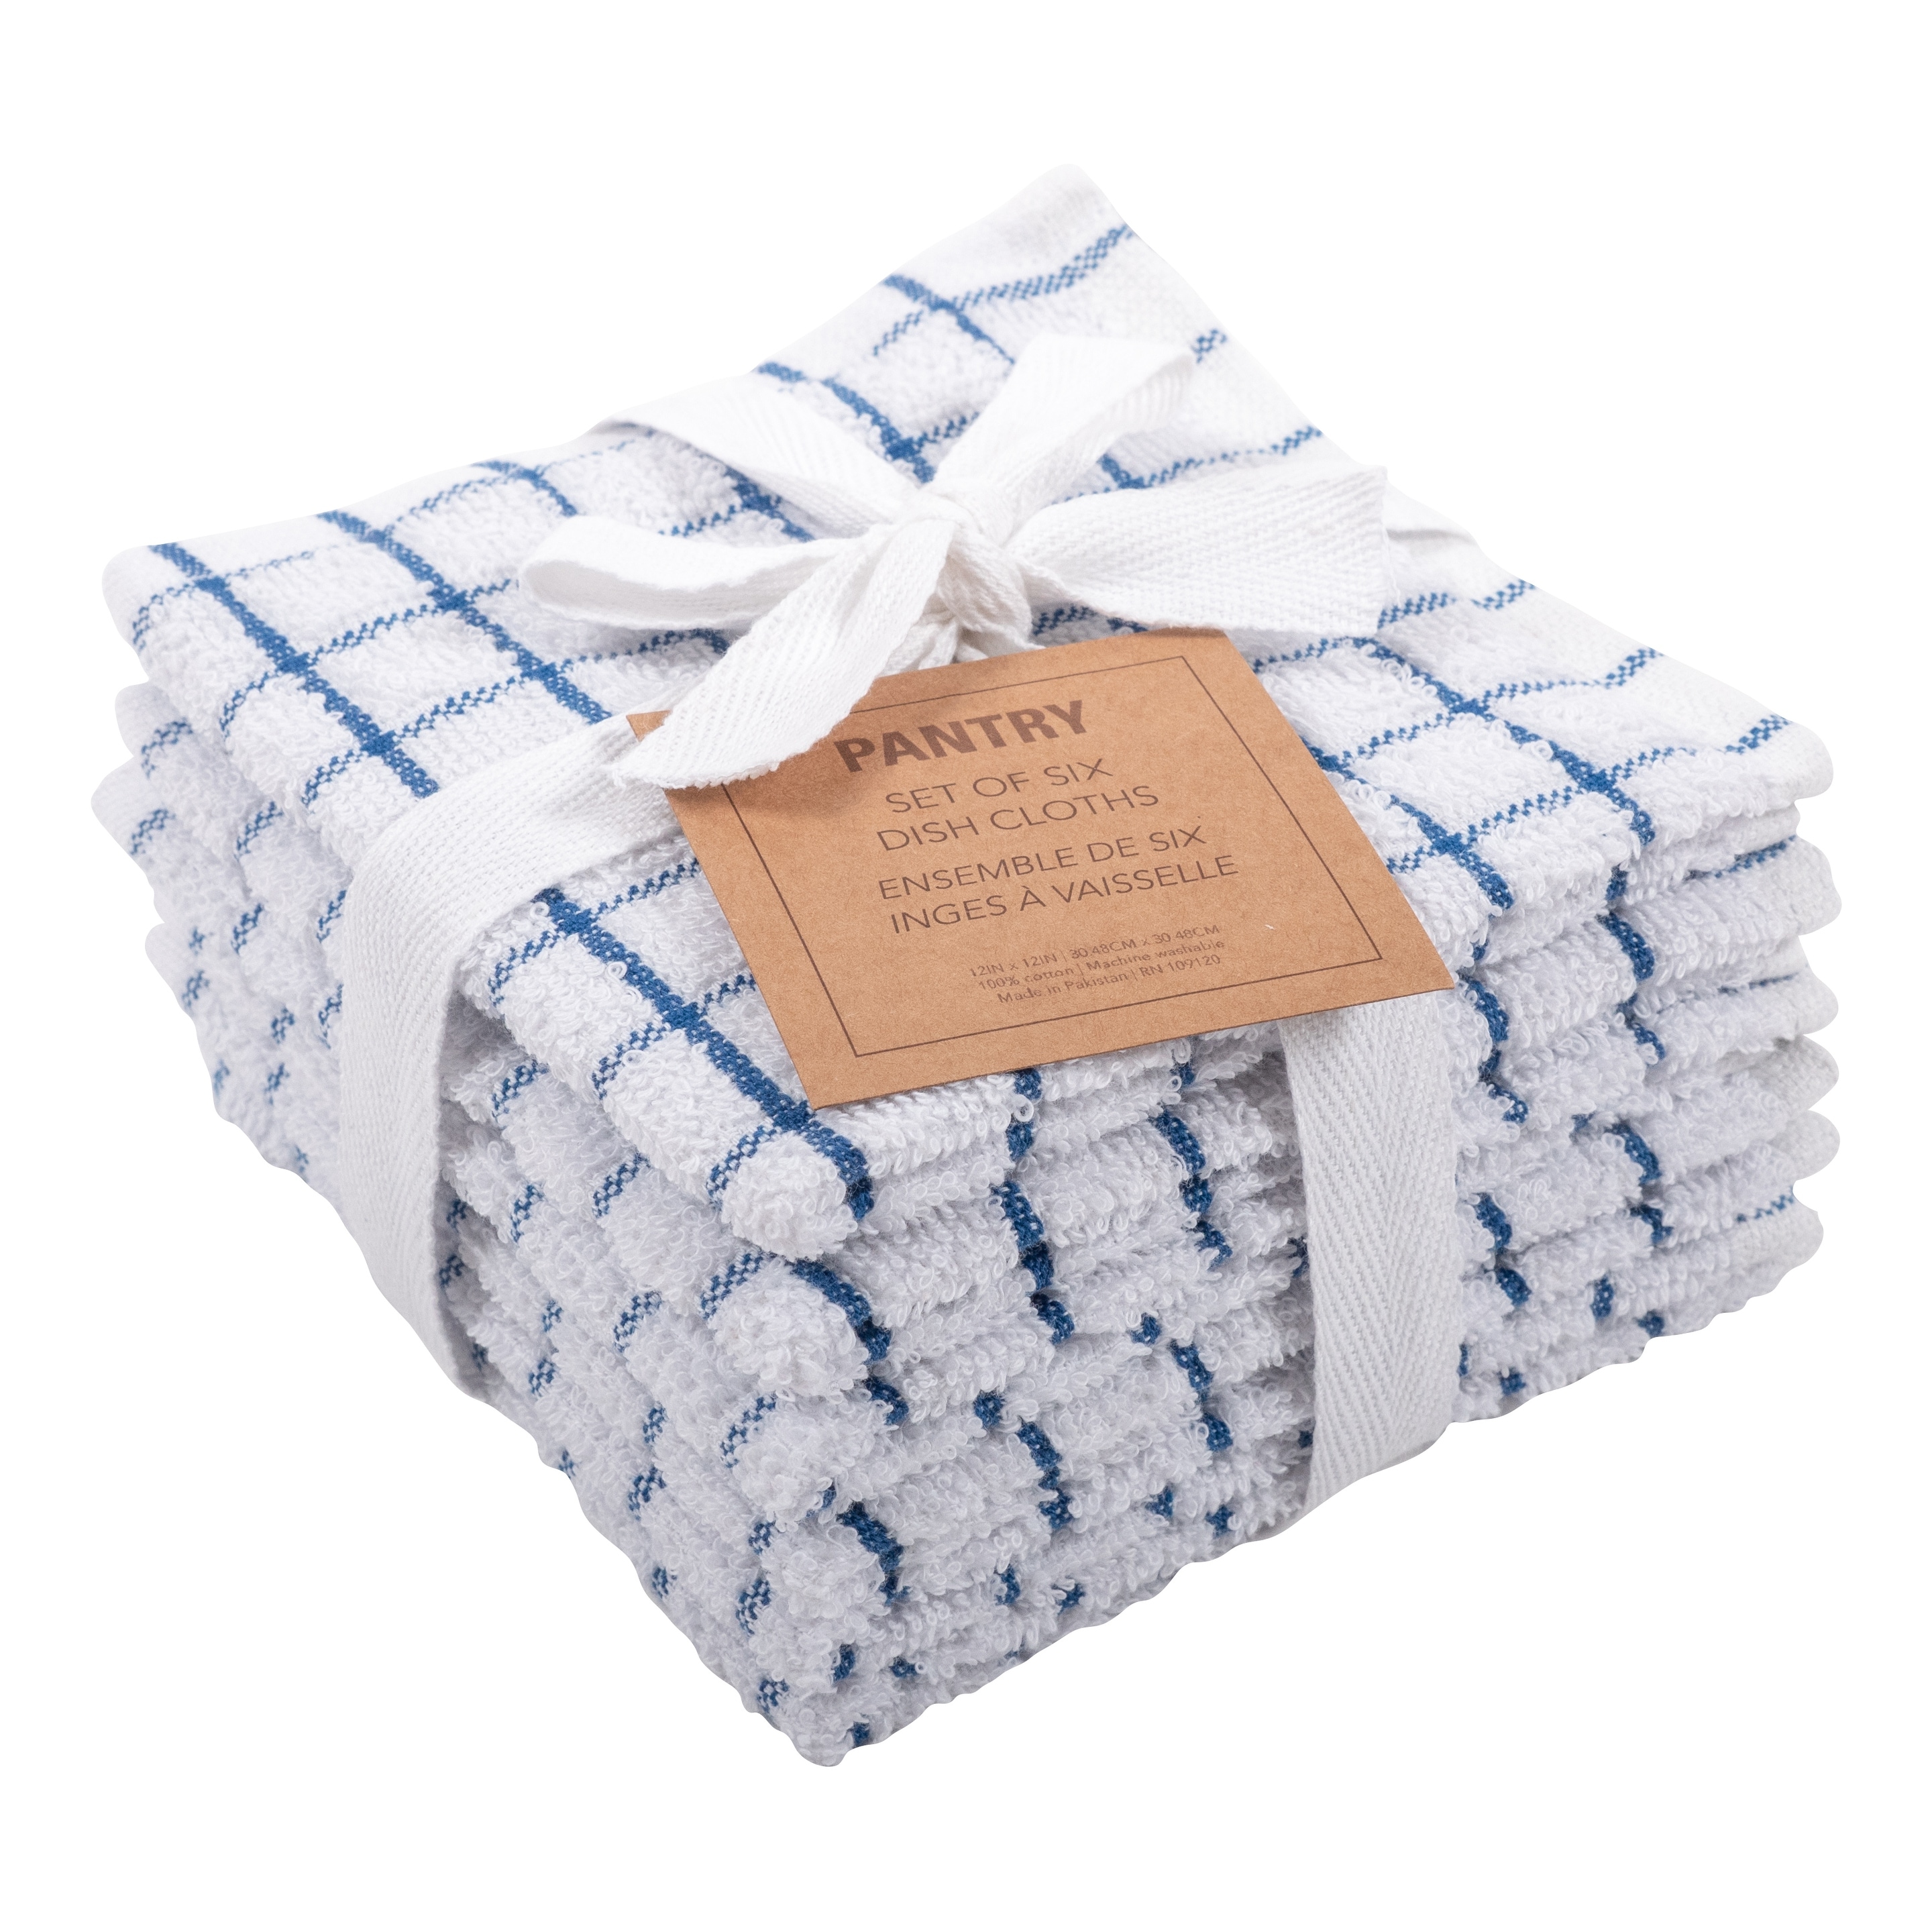 Classic Cotton Terry Cloth Dishcloths, Set of 6